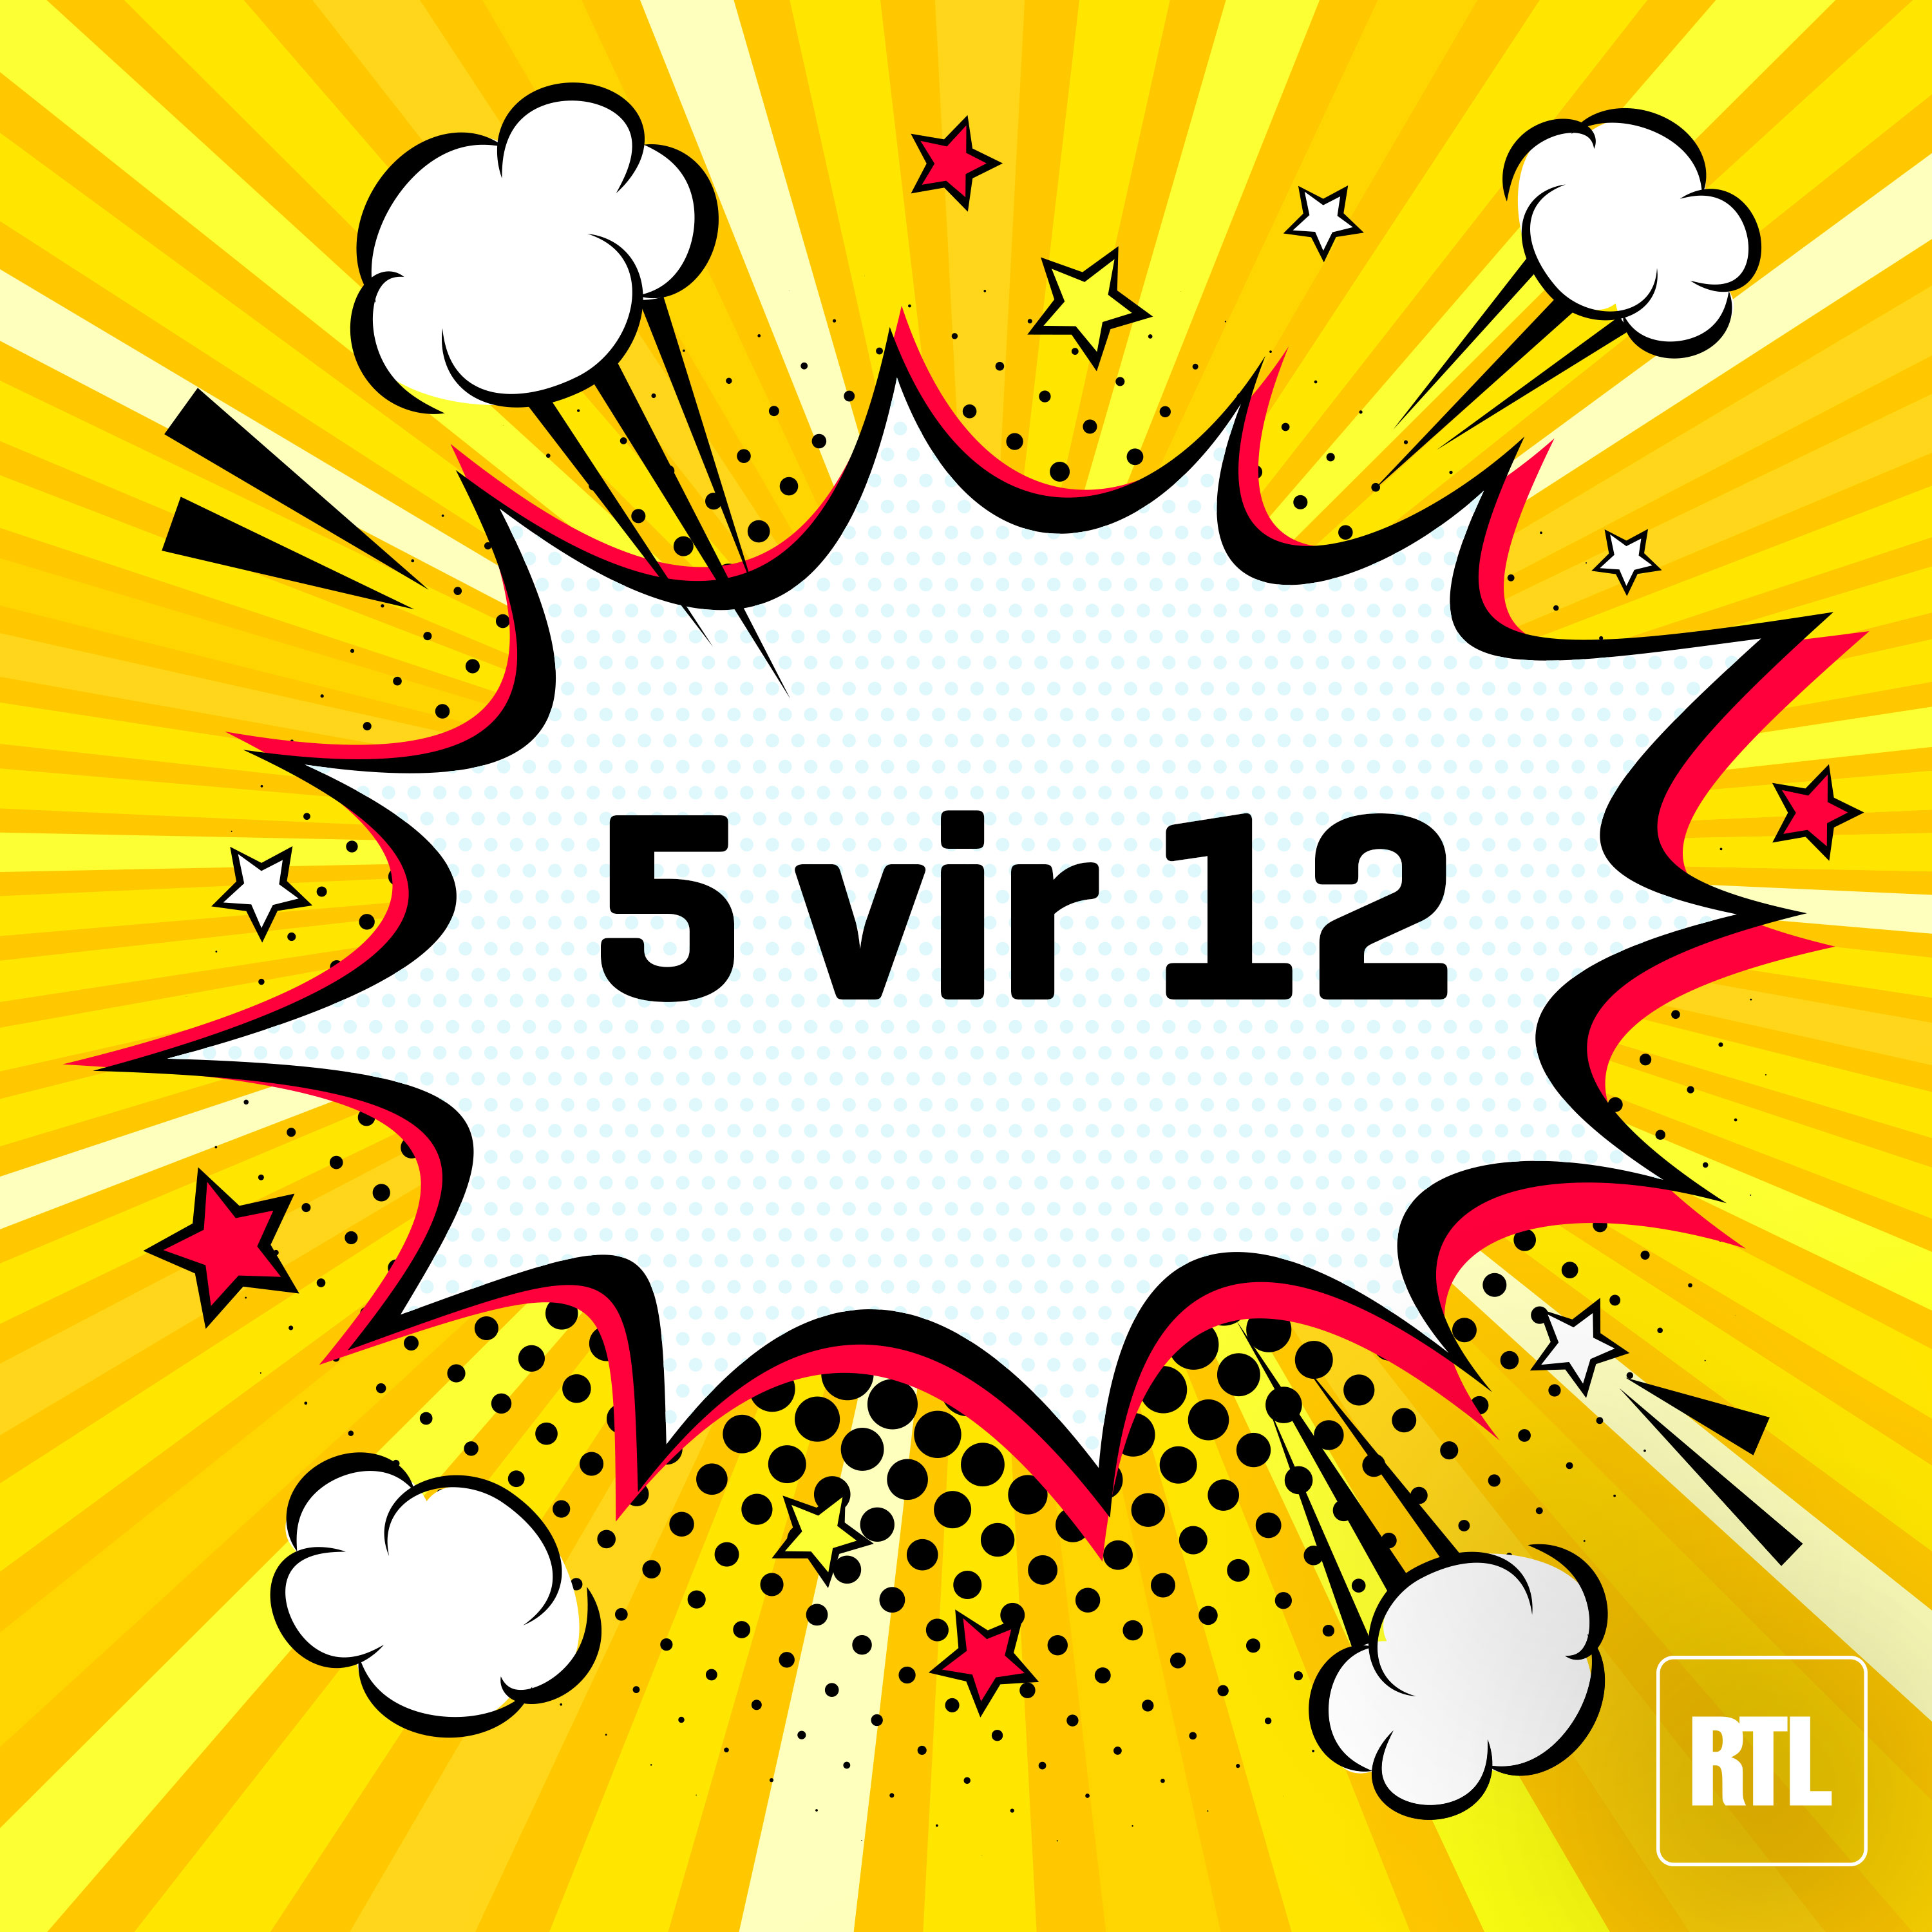 RTL - 5vir12